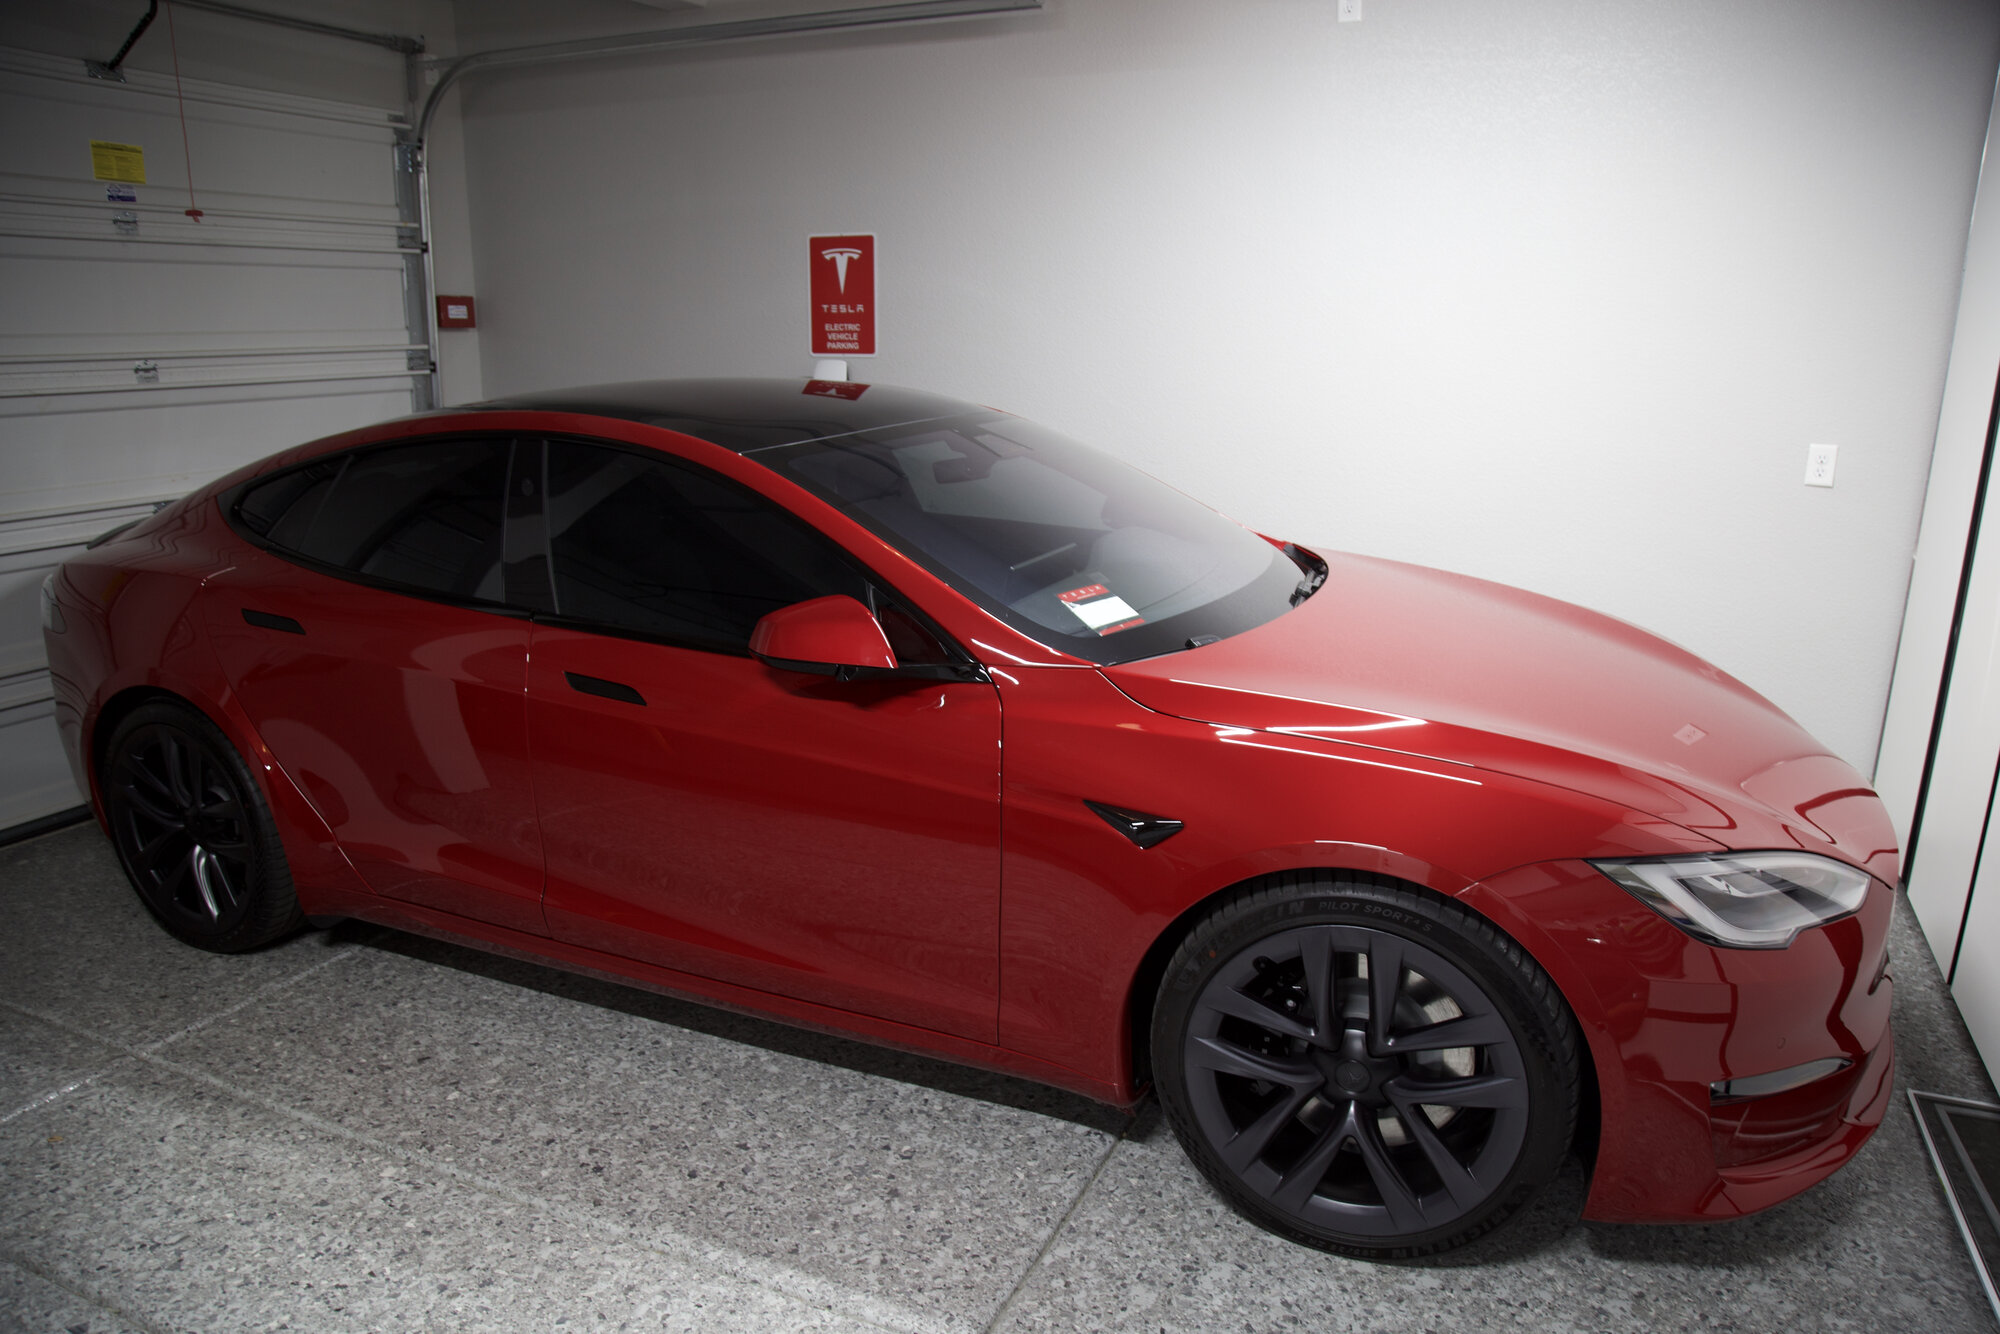 2021 Model S Plaid - Red for sale, 2,880 miles, PPF + ceramic | Tesla  Motors Club